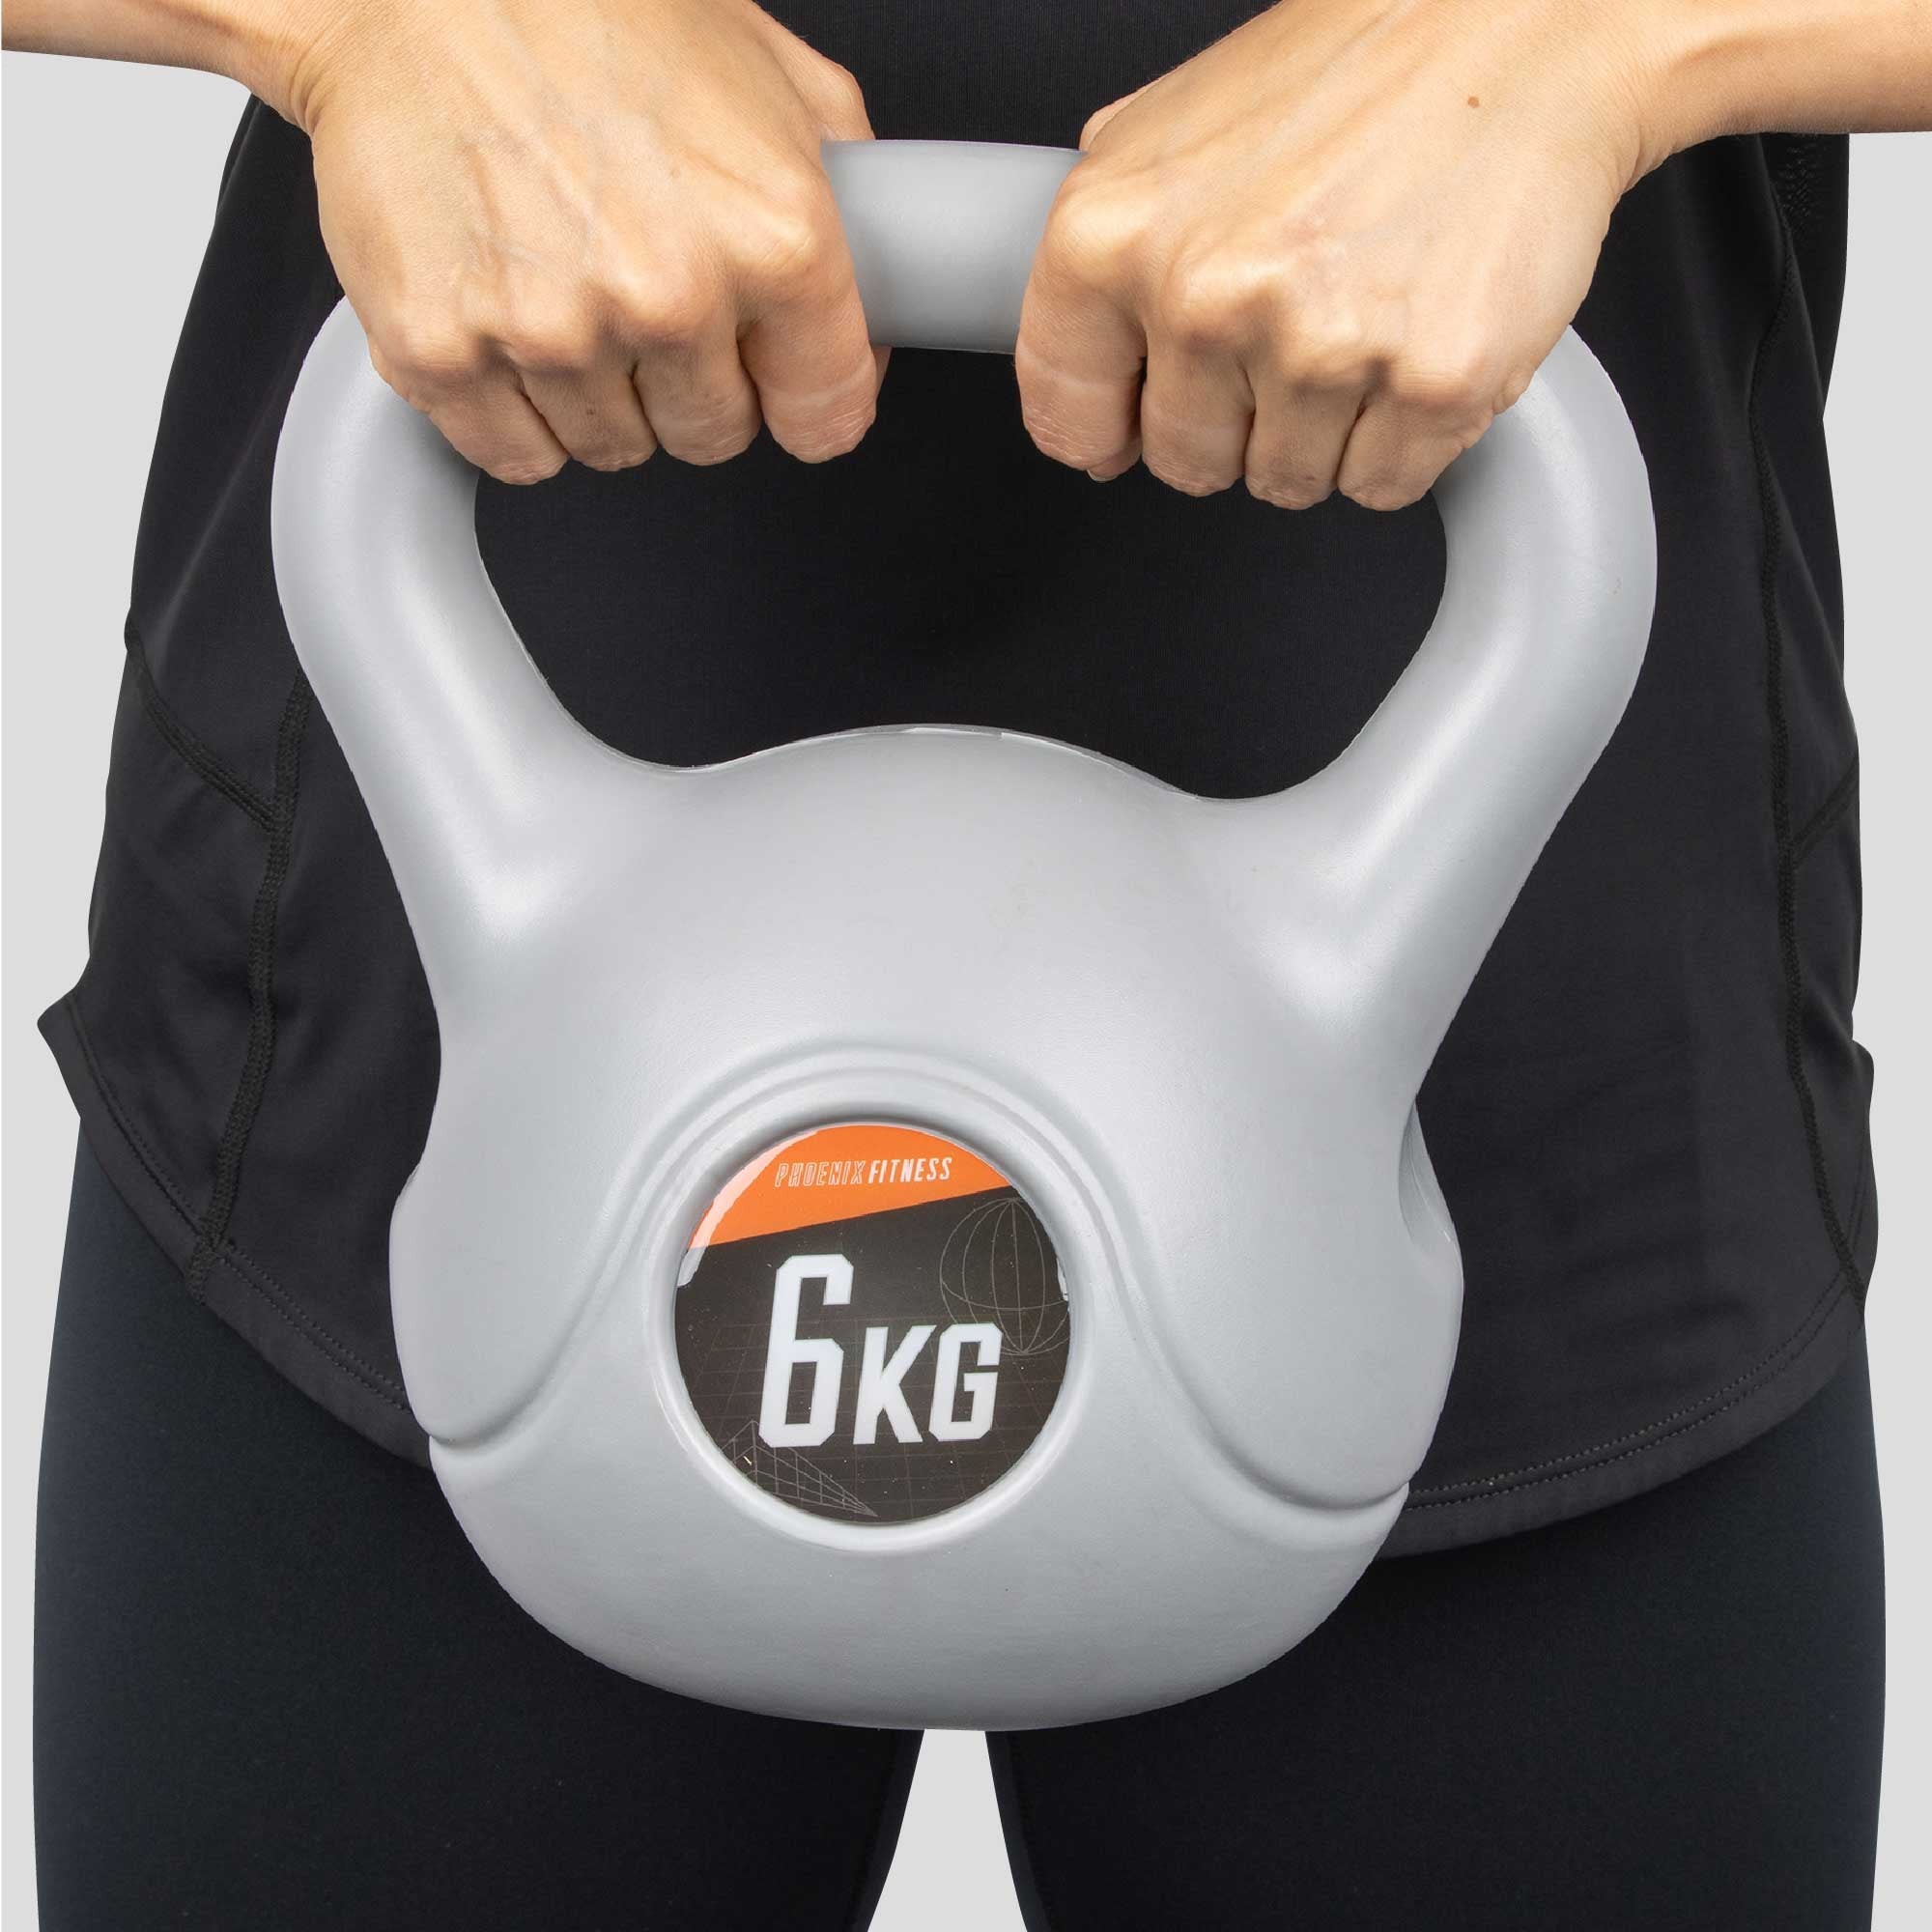 Phoenix Fitness Vinyl 6KG Kettlebell Exercise Weight